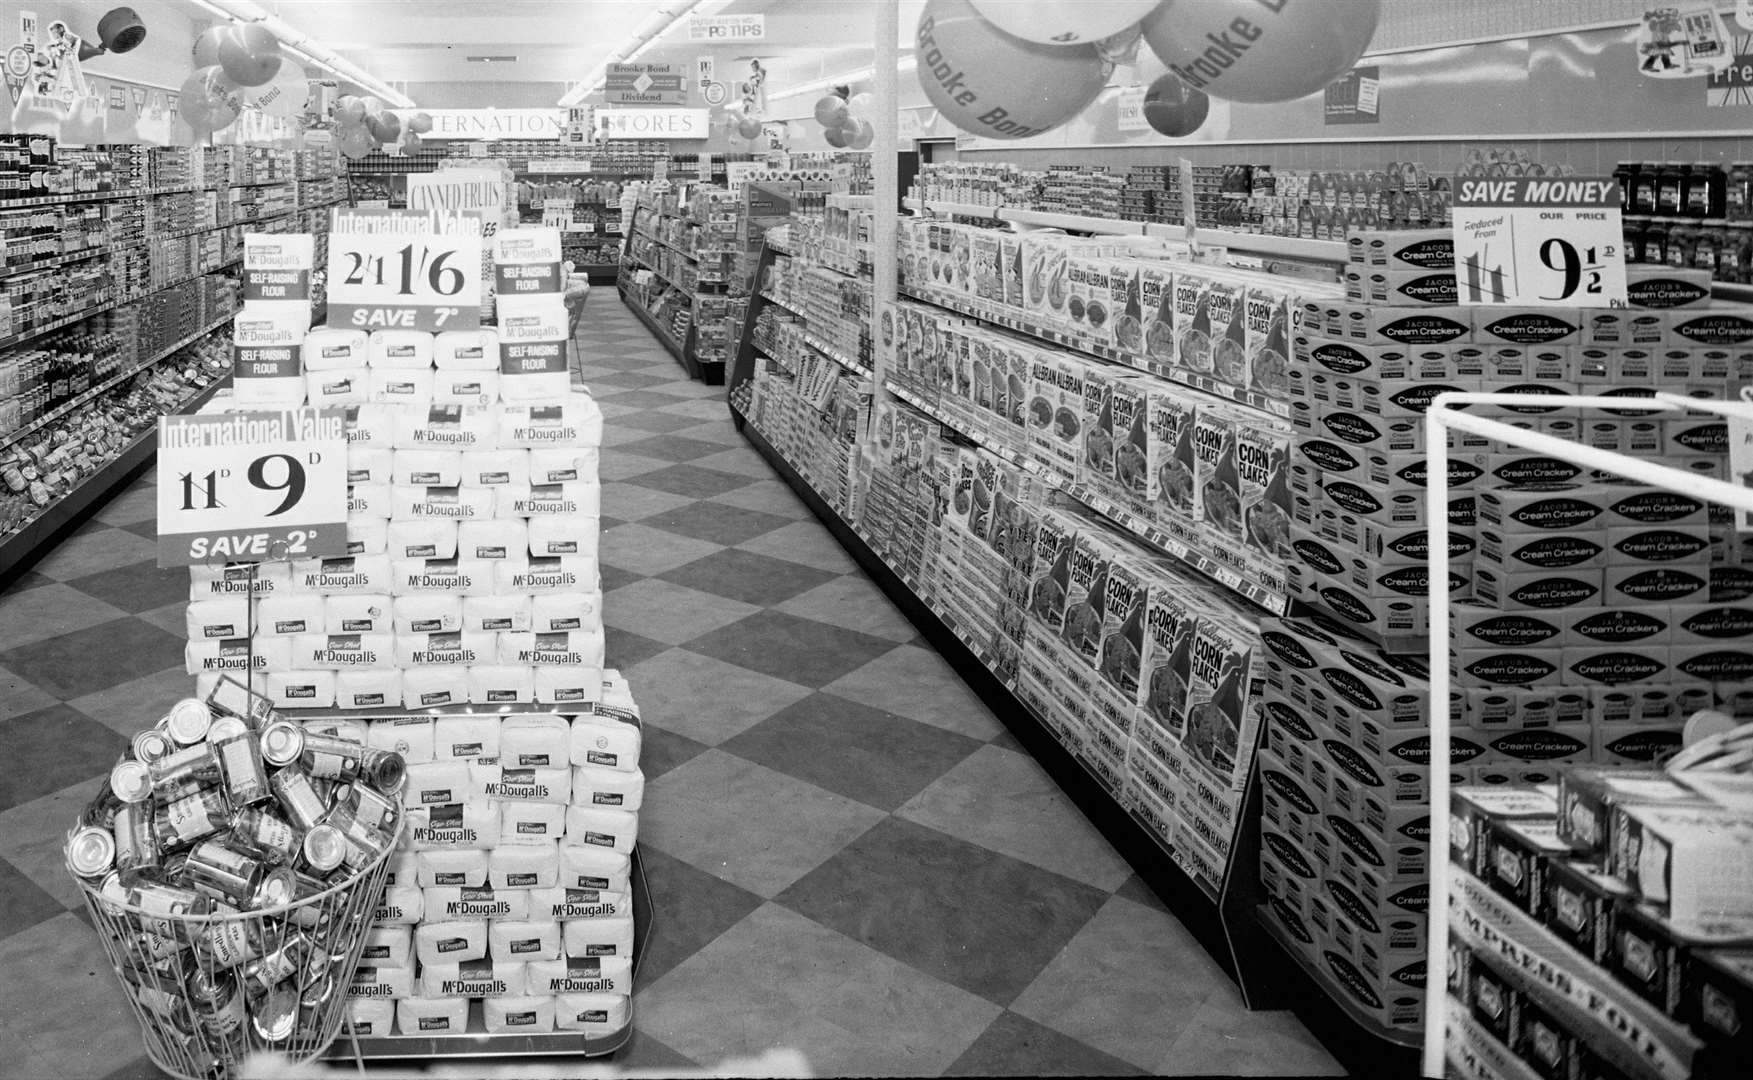 How shop prices were shown pre-decimal. Ashford, 1956. Picture: Steve Salter